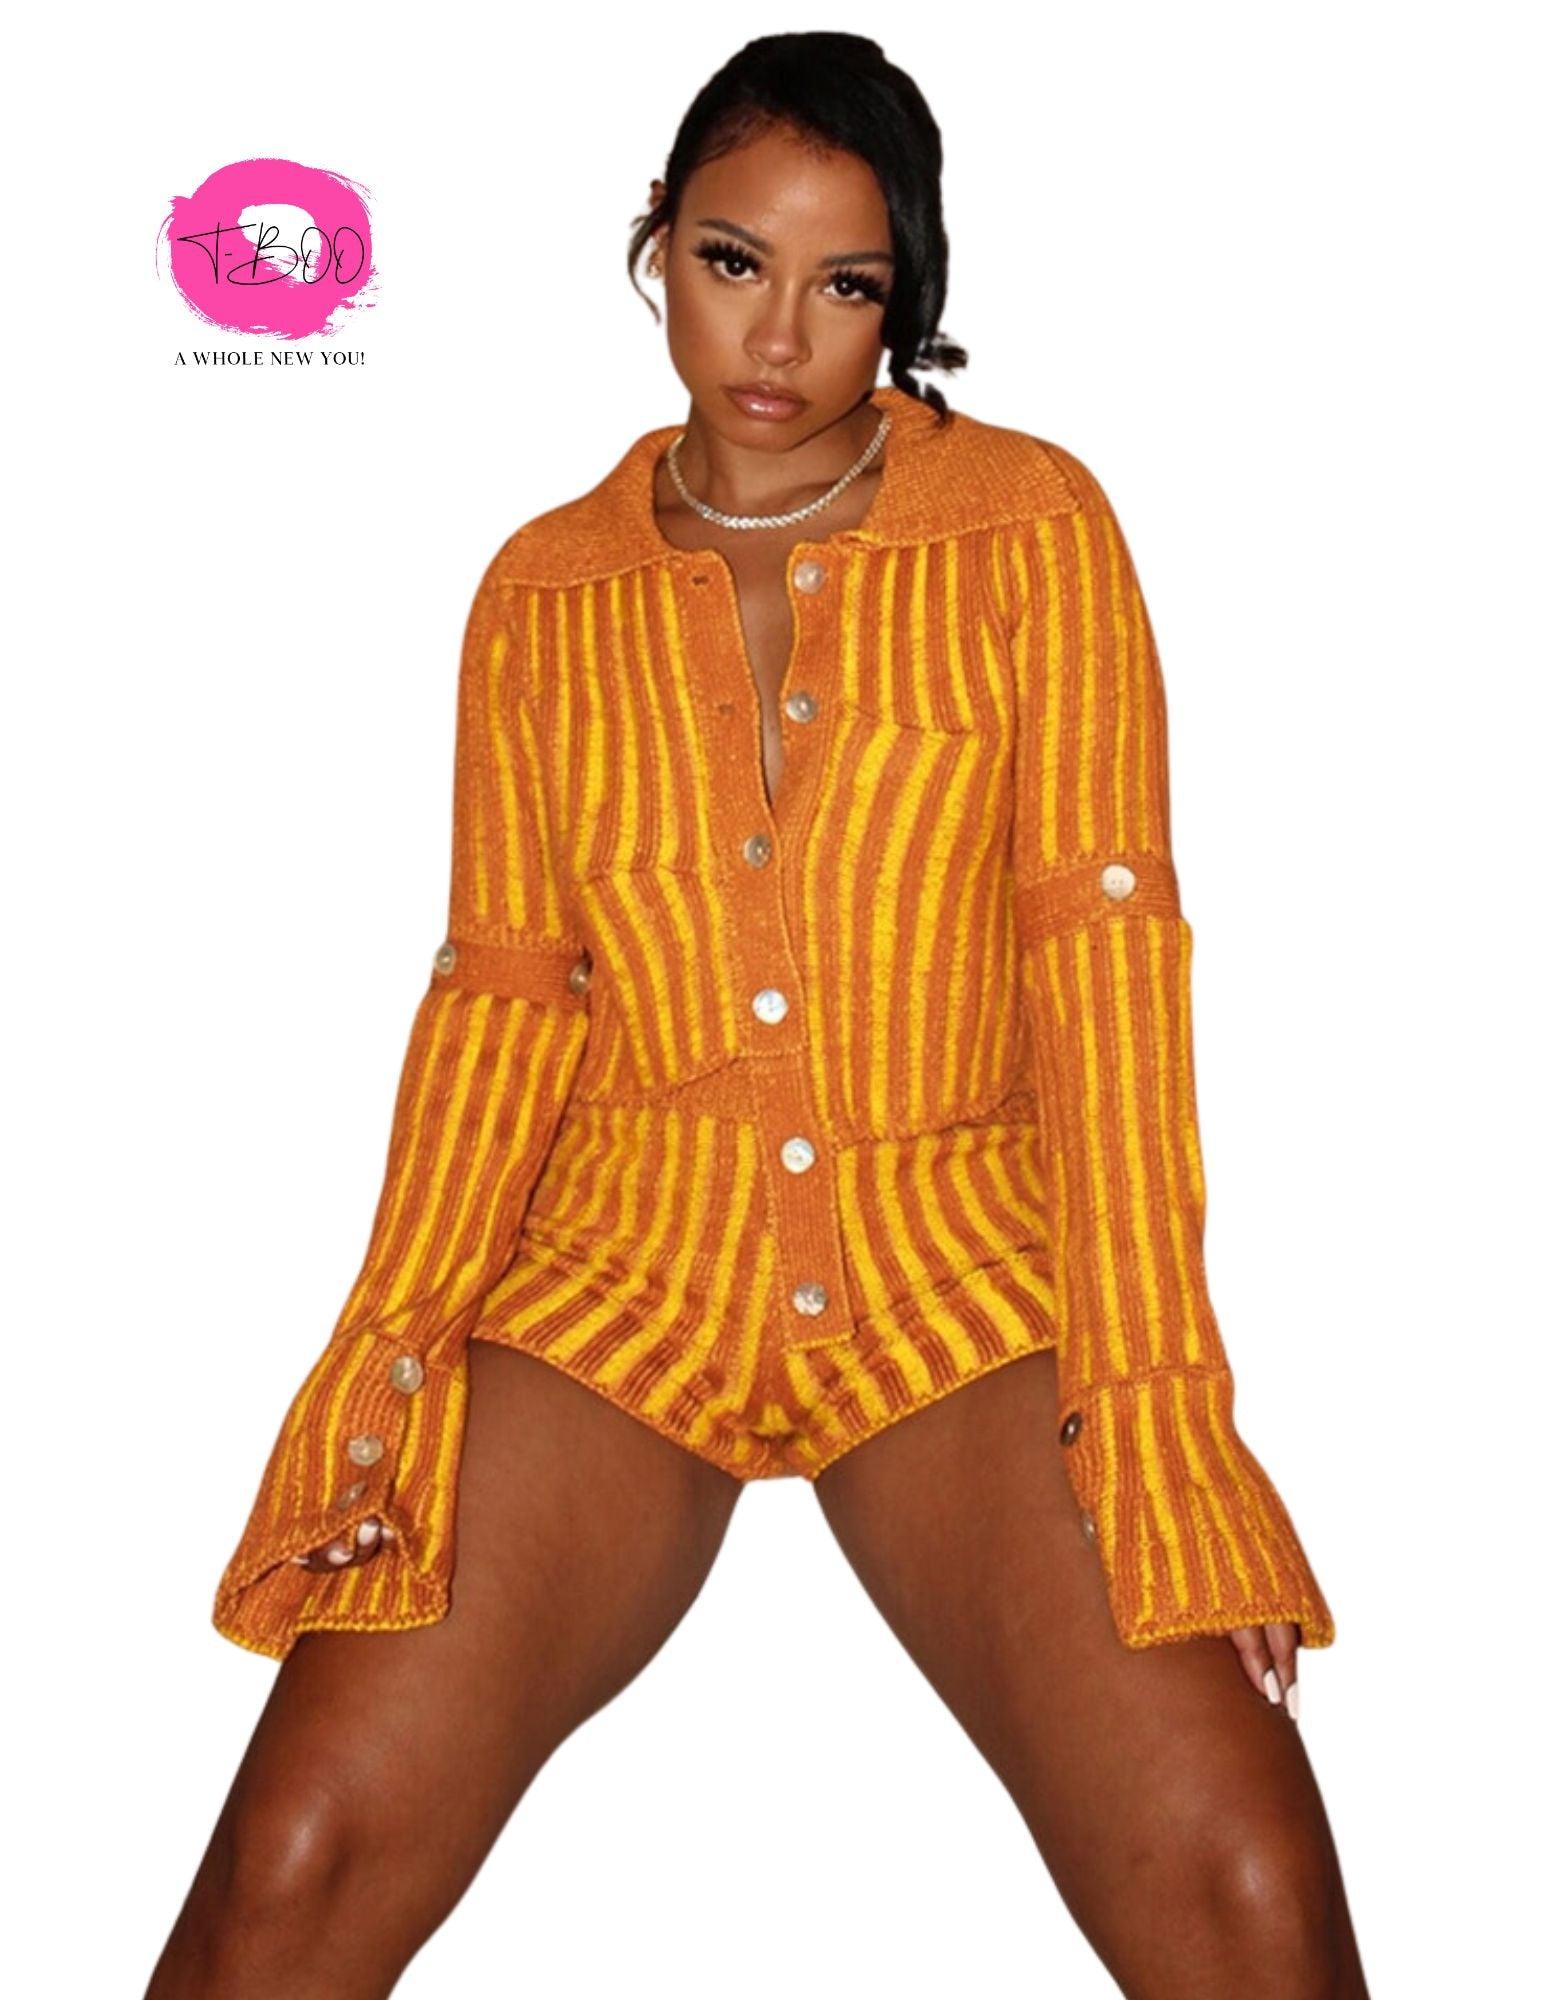 T-BOO 2 Piece Set Women Striped Crochet Casual Wear Long Sleeve Skinny Button Tops+High Waist Bottoms Matching Street Sportswear